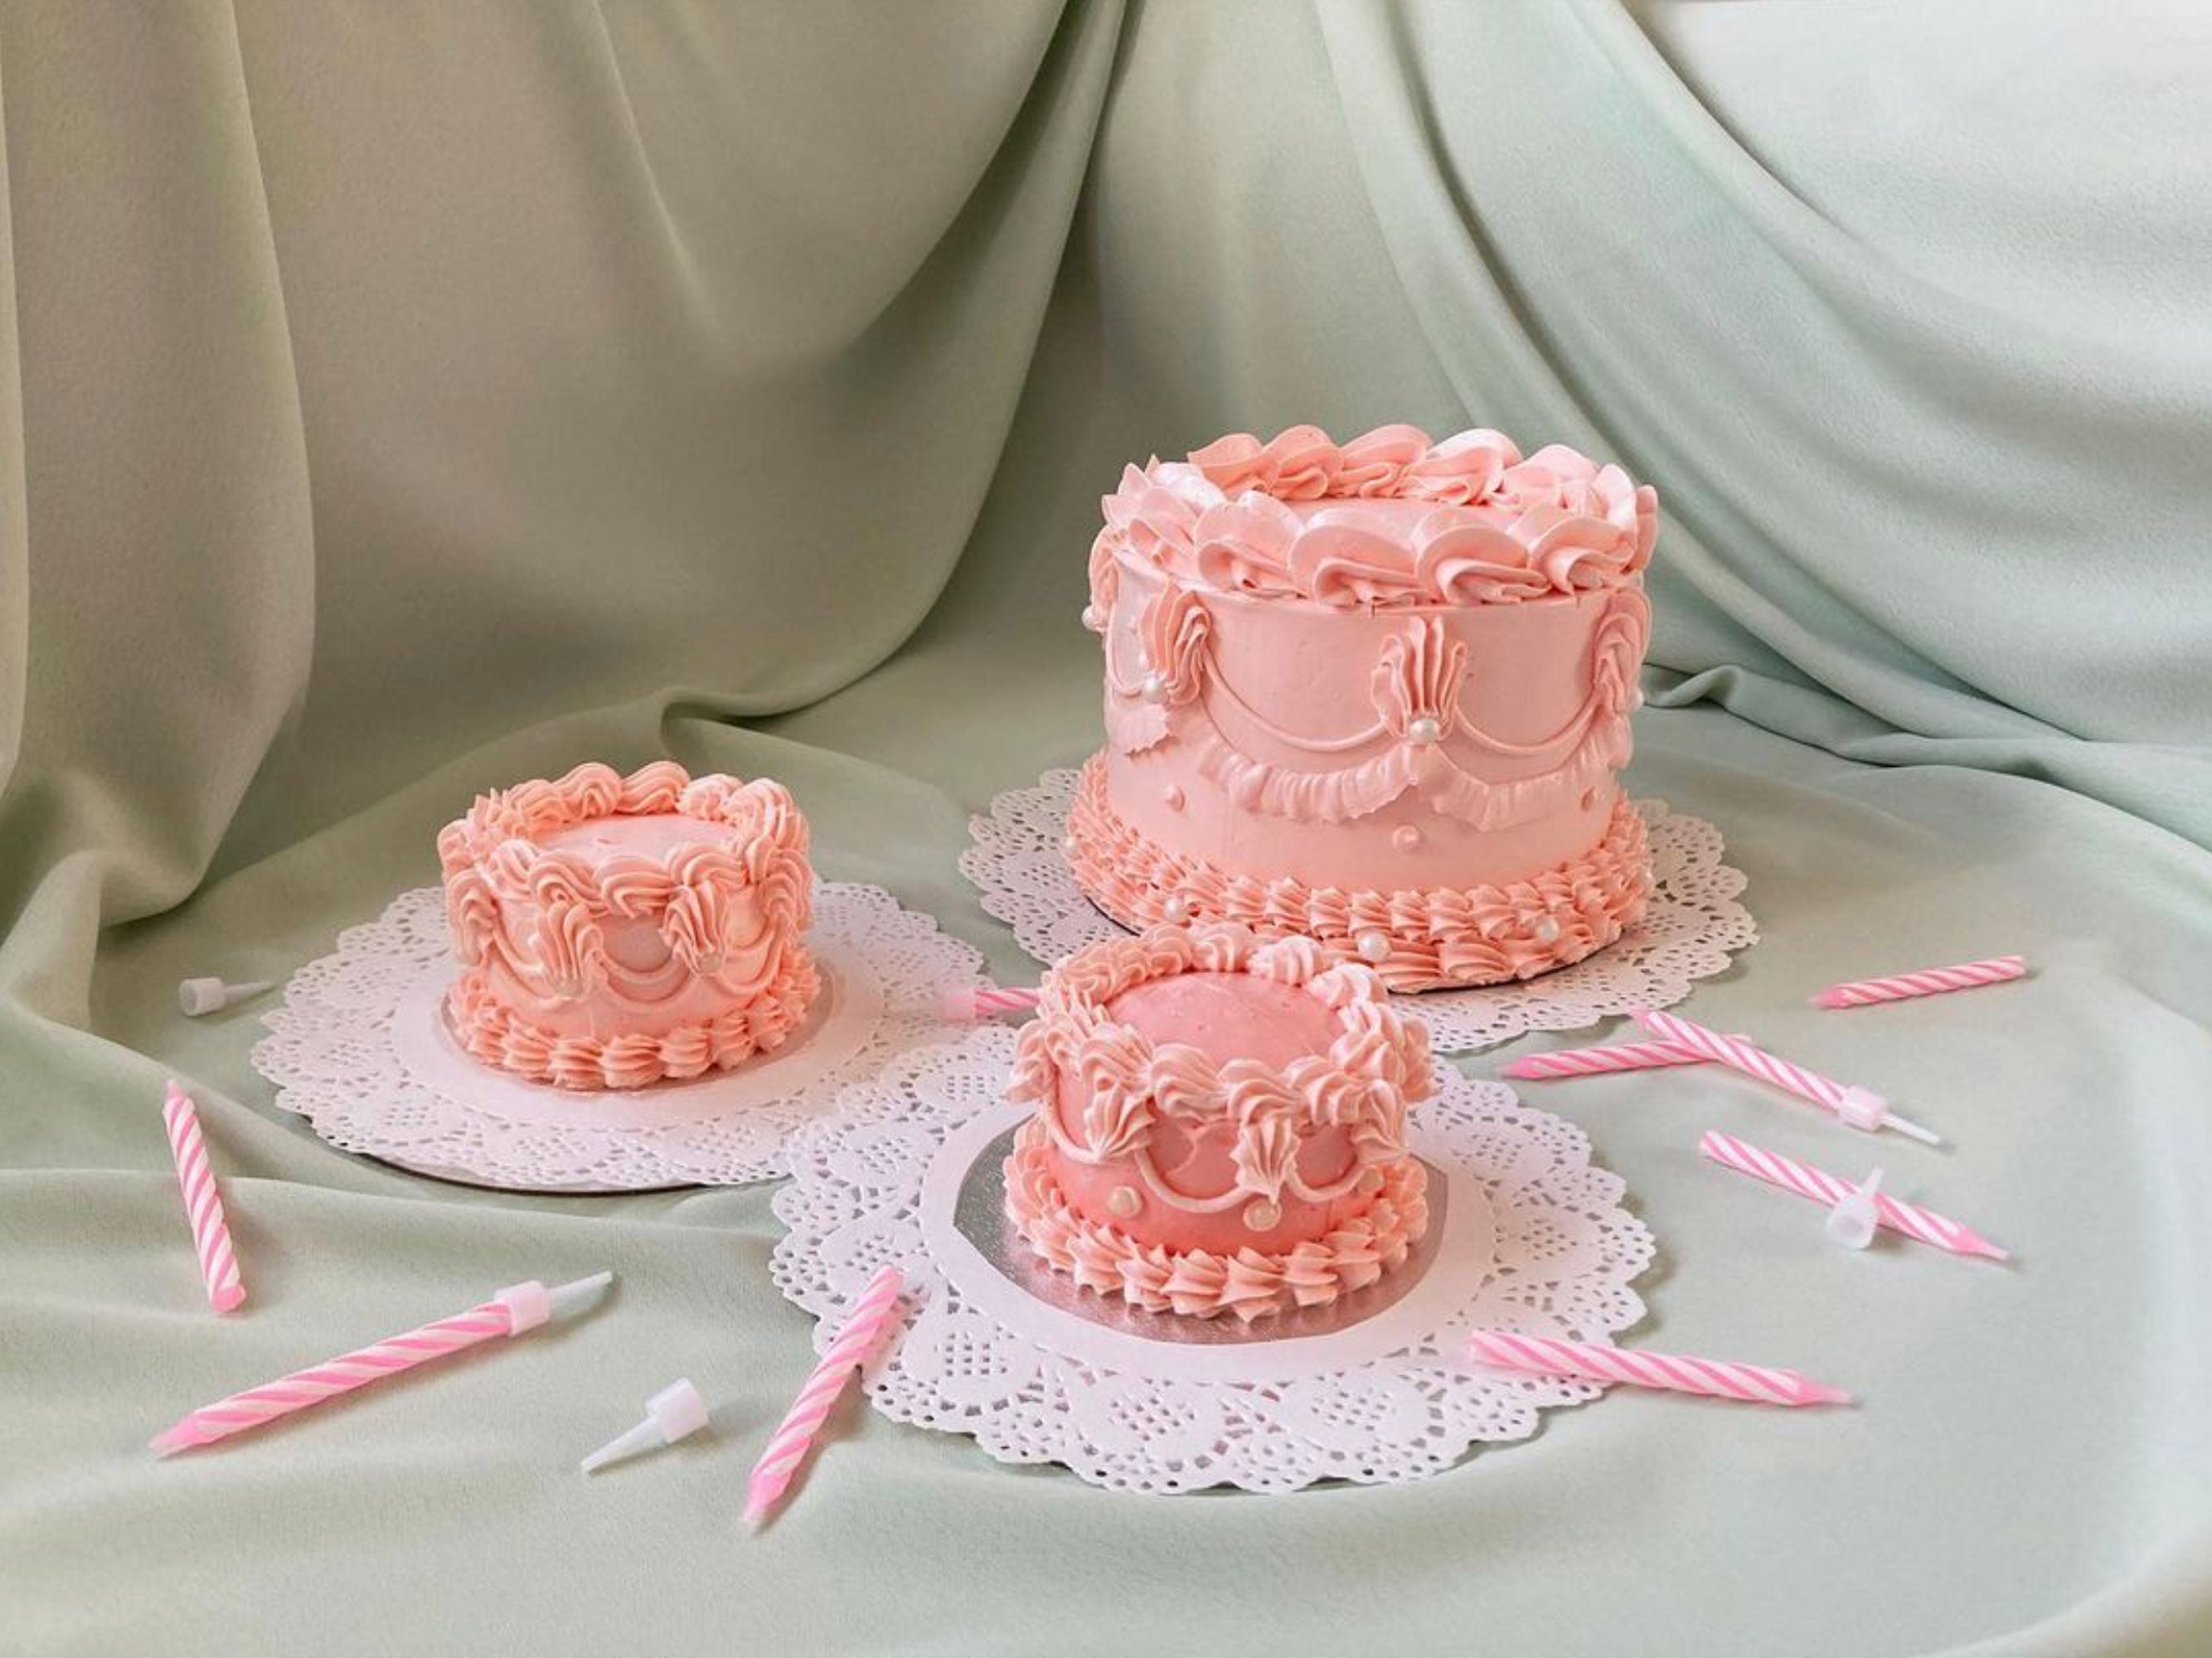 Kara's Party Ideas Marie Antoinette Inspired Party | Kara's Party Ideas |  Pretty birthday cakes, Vintage cake, Cake images